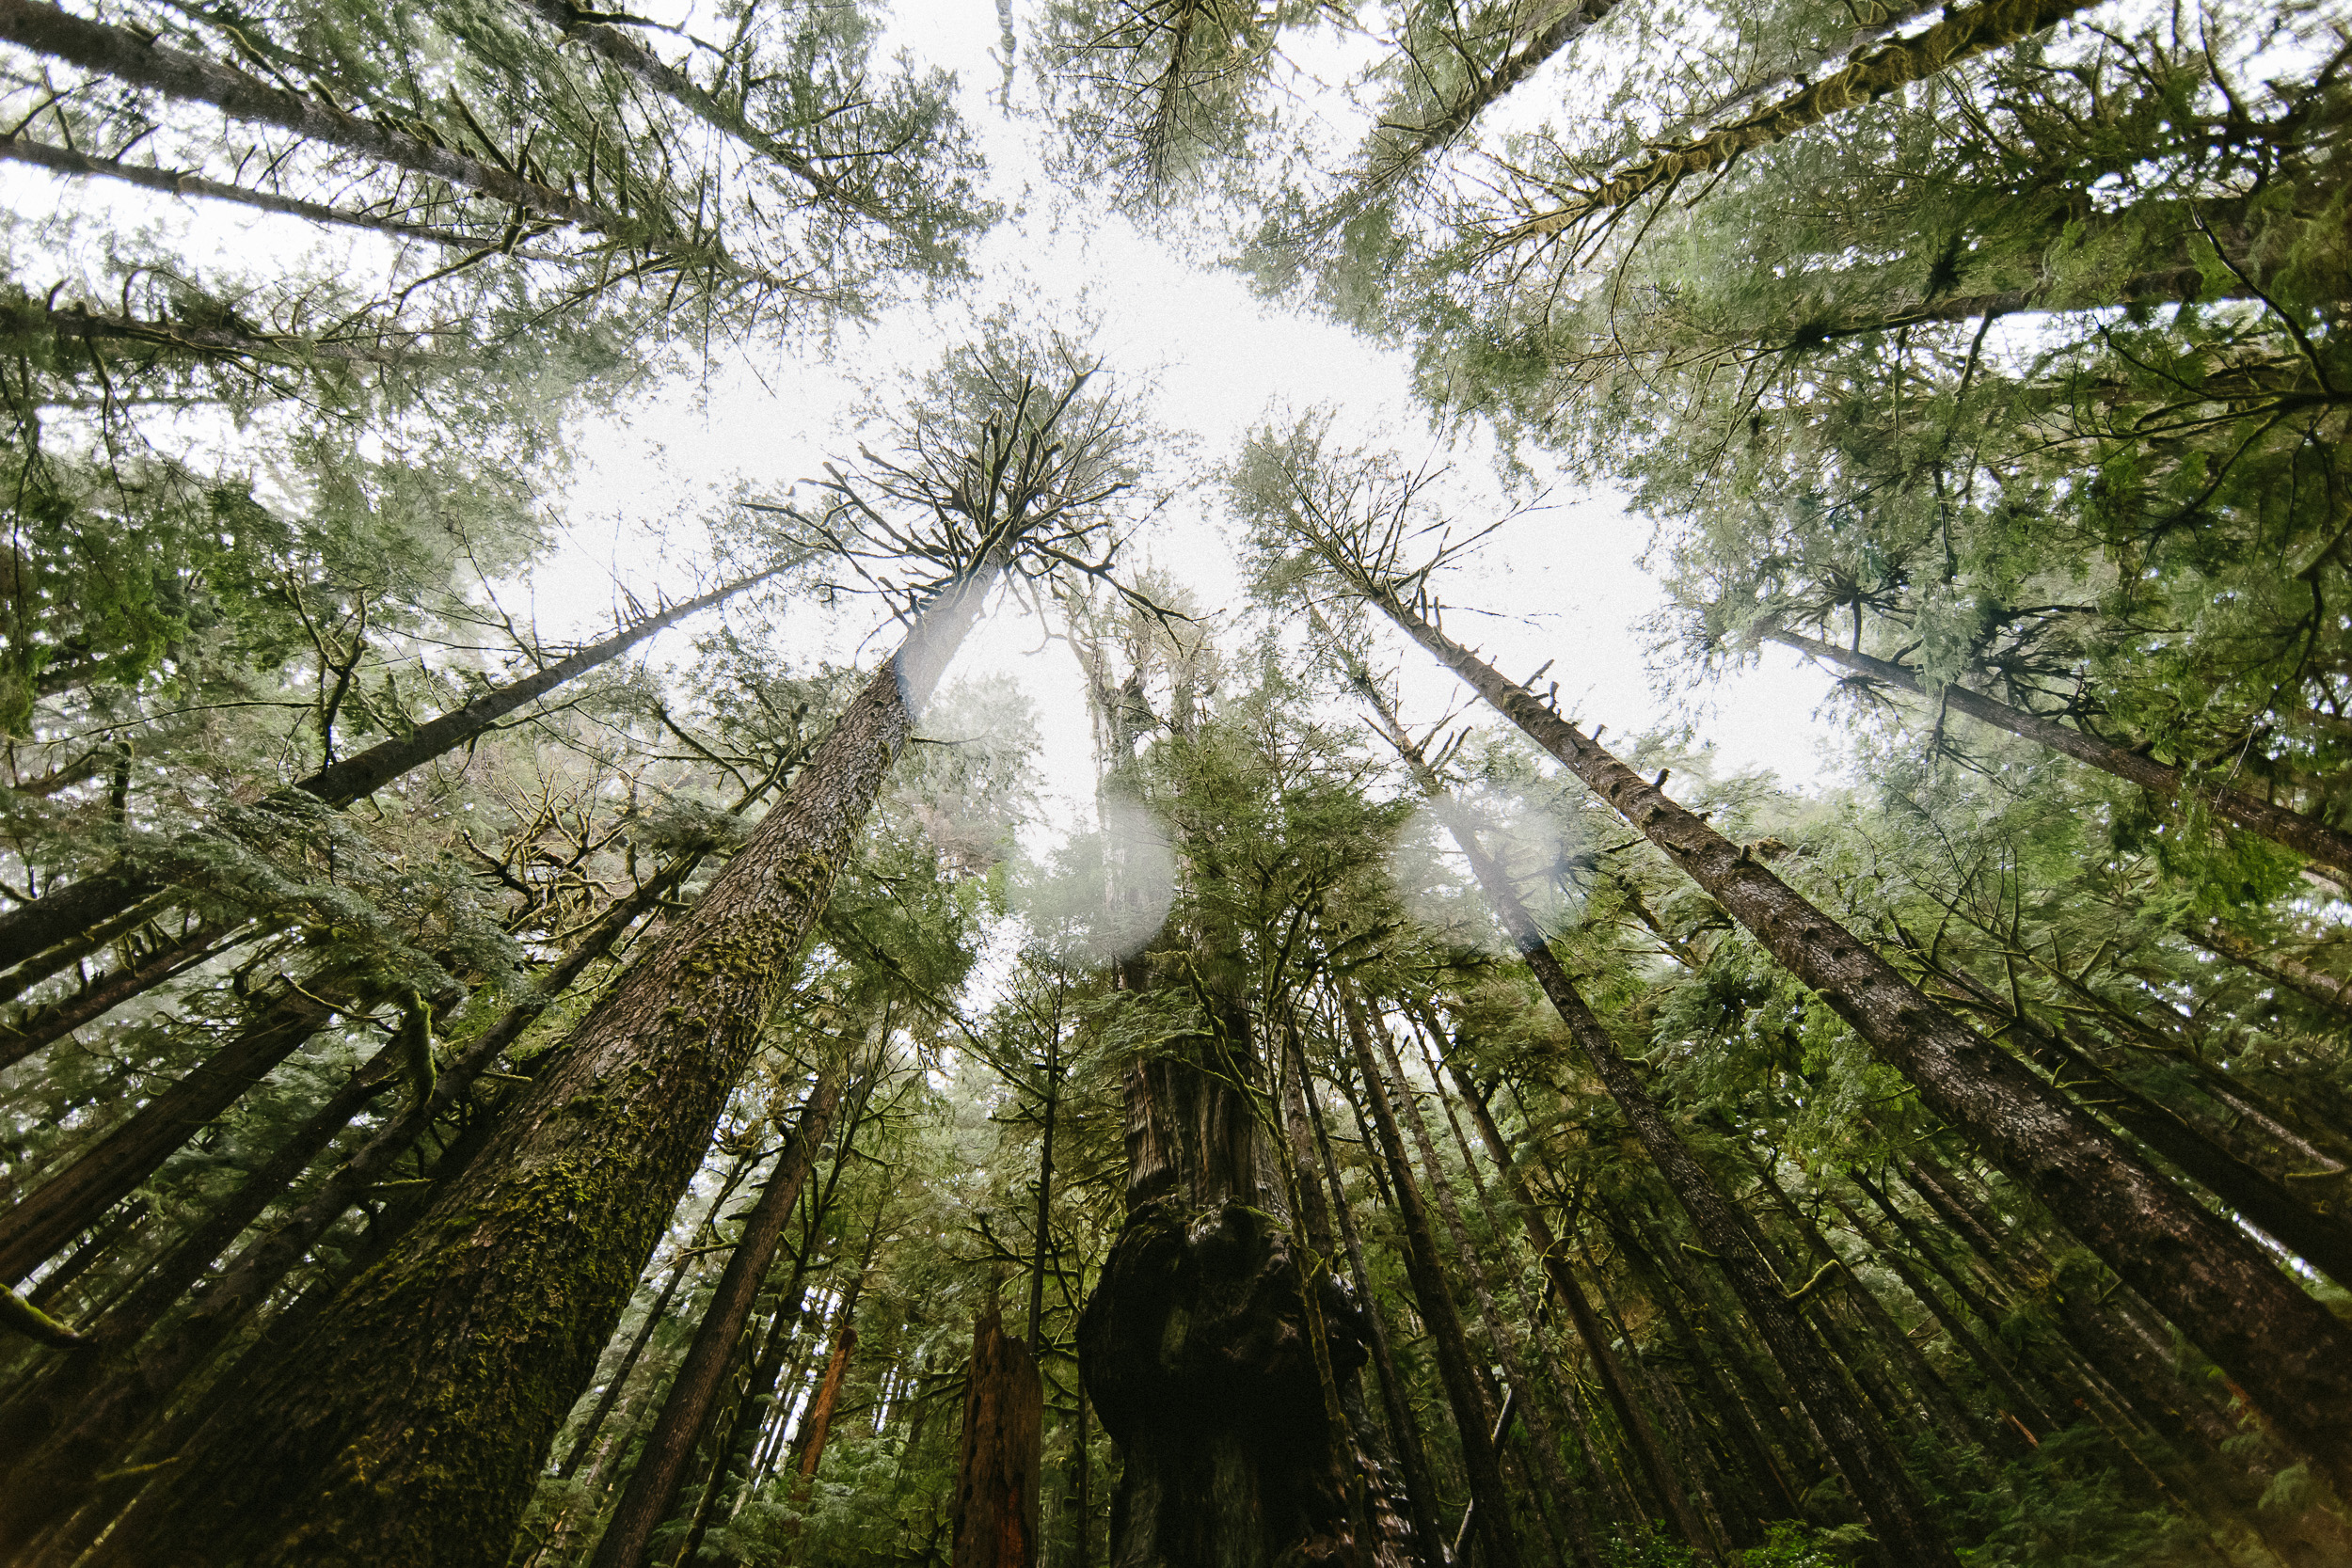 02-Vancouver-Island-Old-Growth-Forests-Logging-Port-Renfrew-Avatar-Grove.jpg